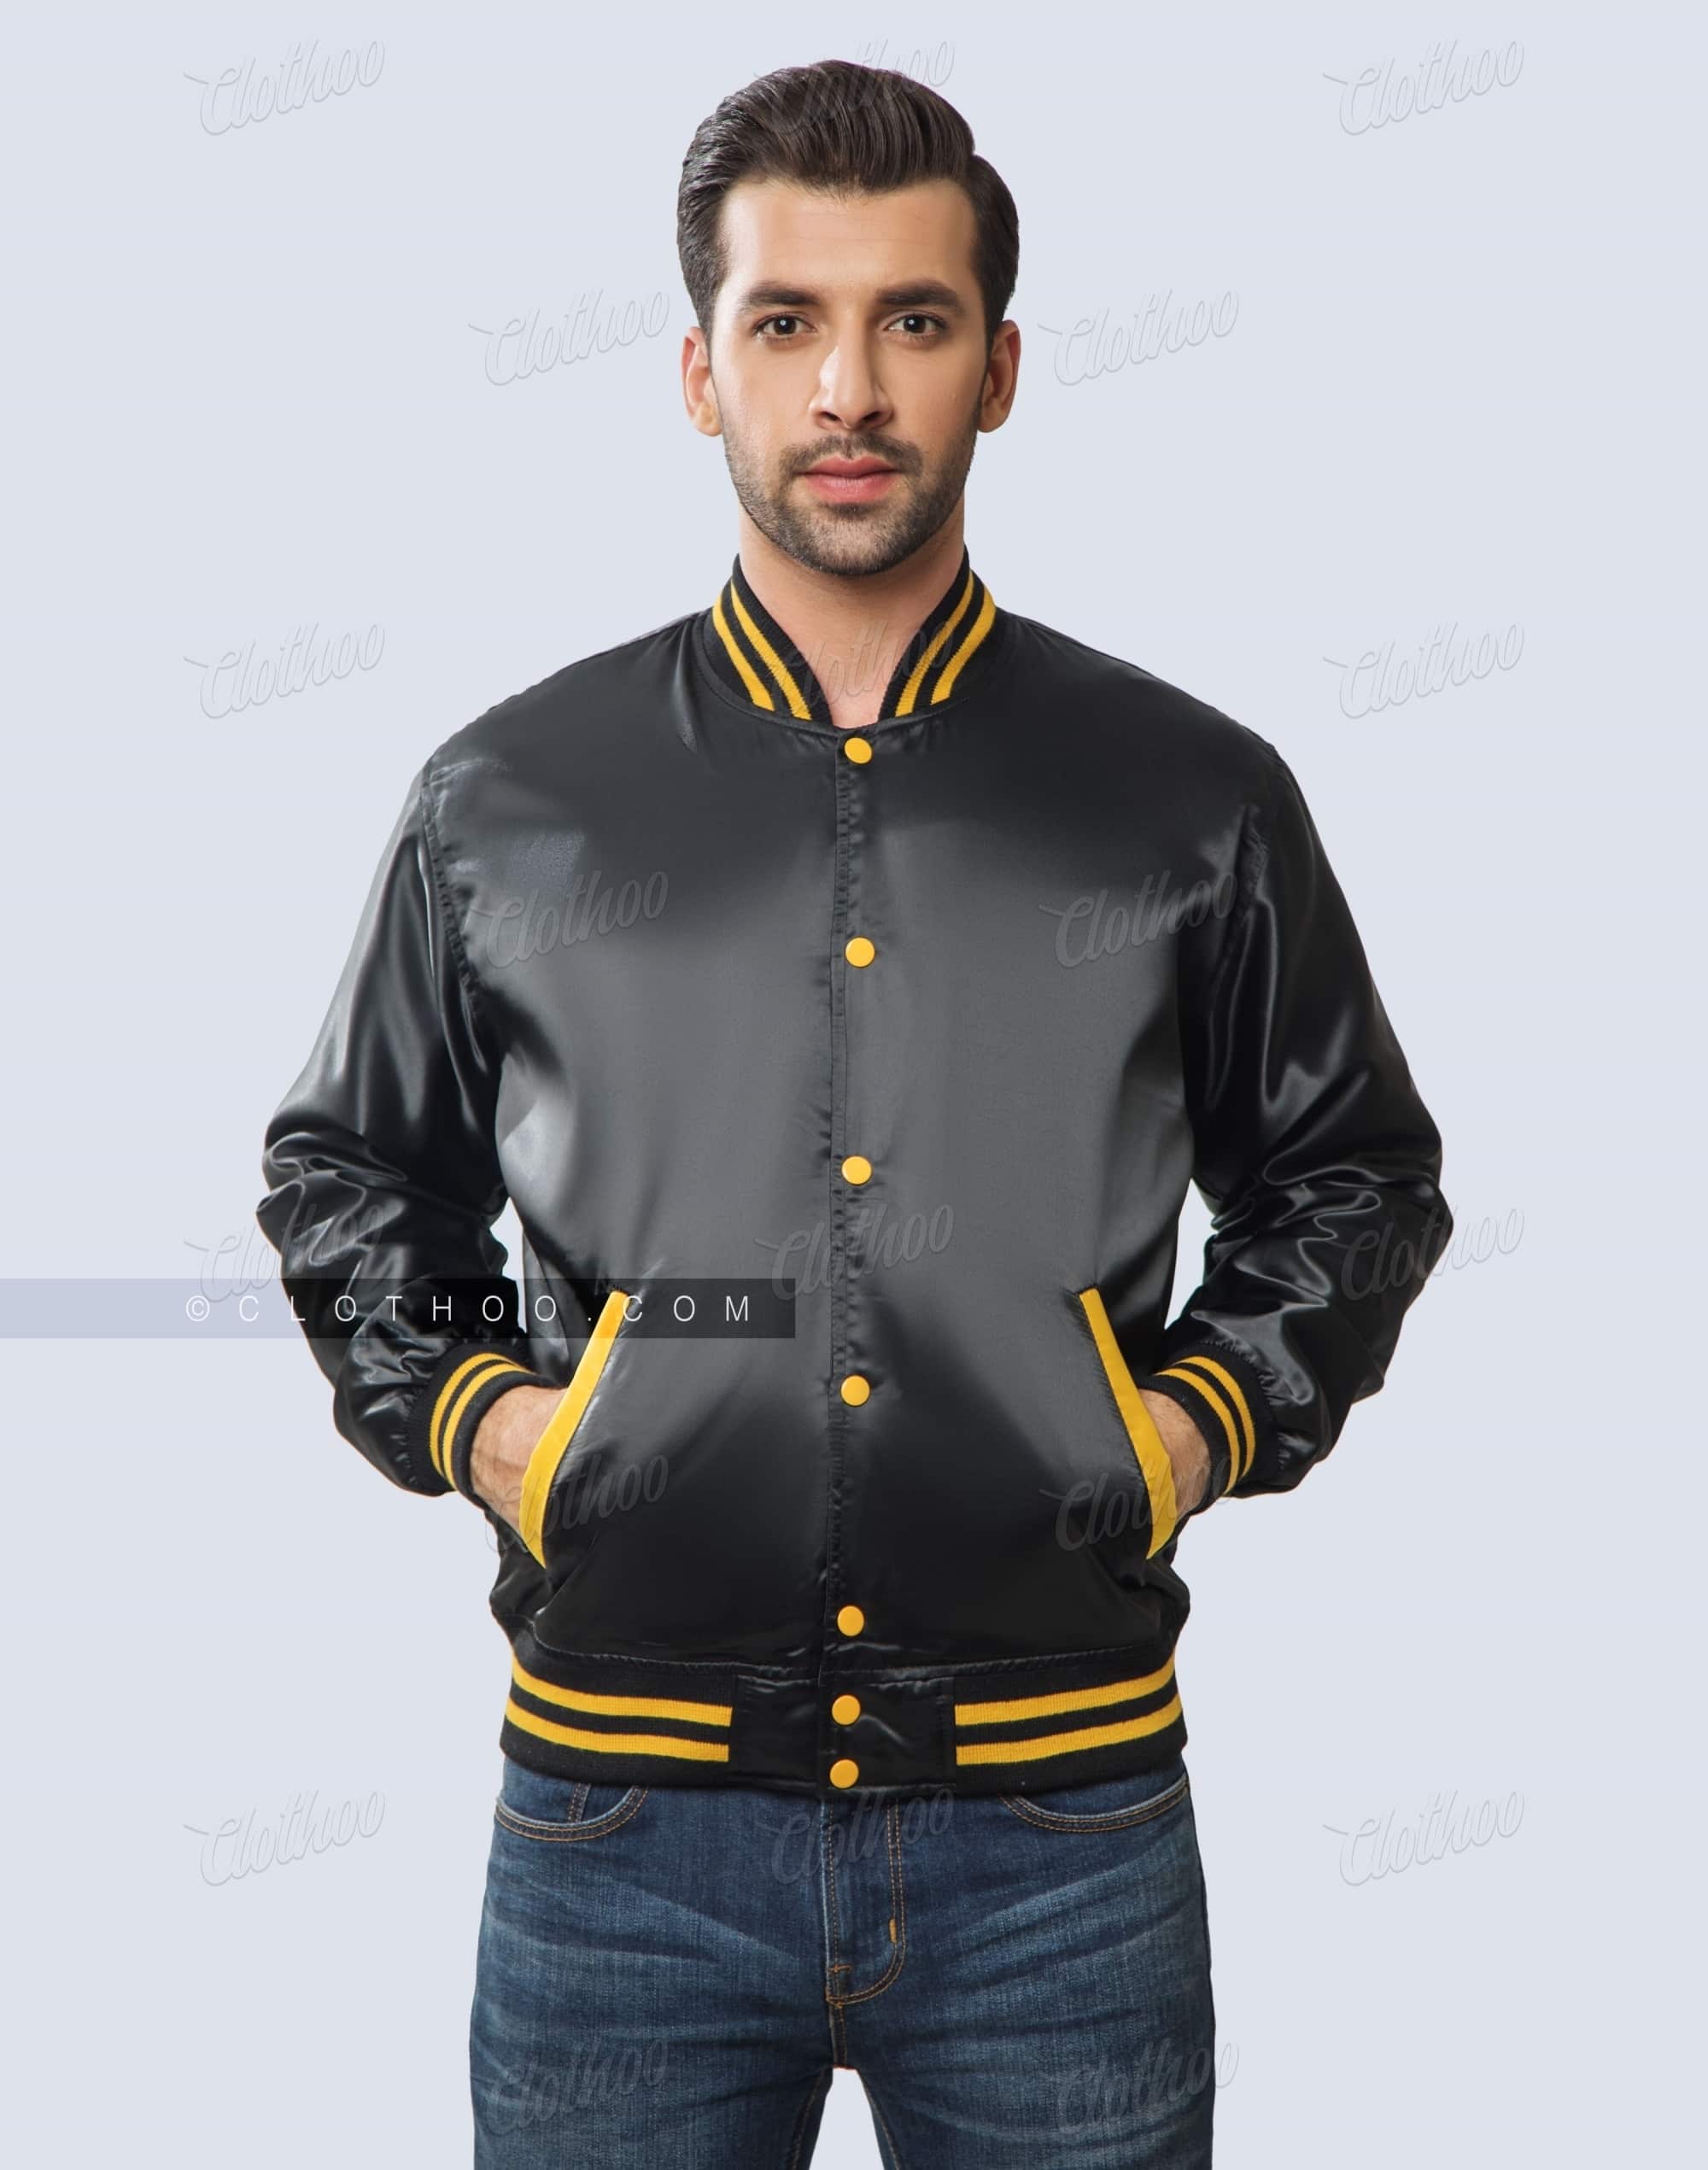 Baseball Style Black and Gold Satin Jacket | Clothoo